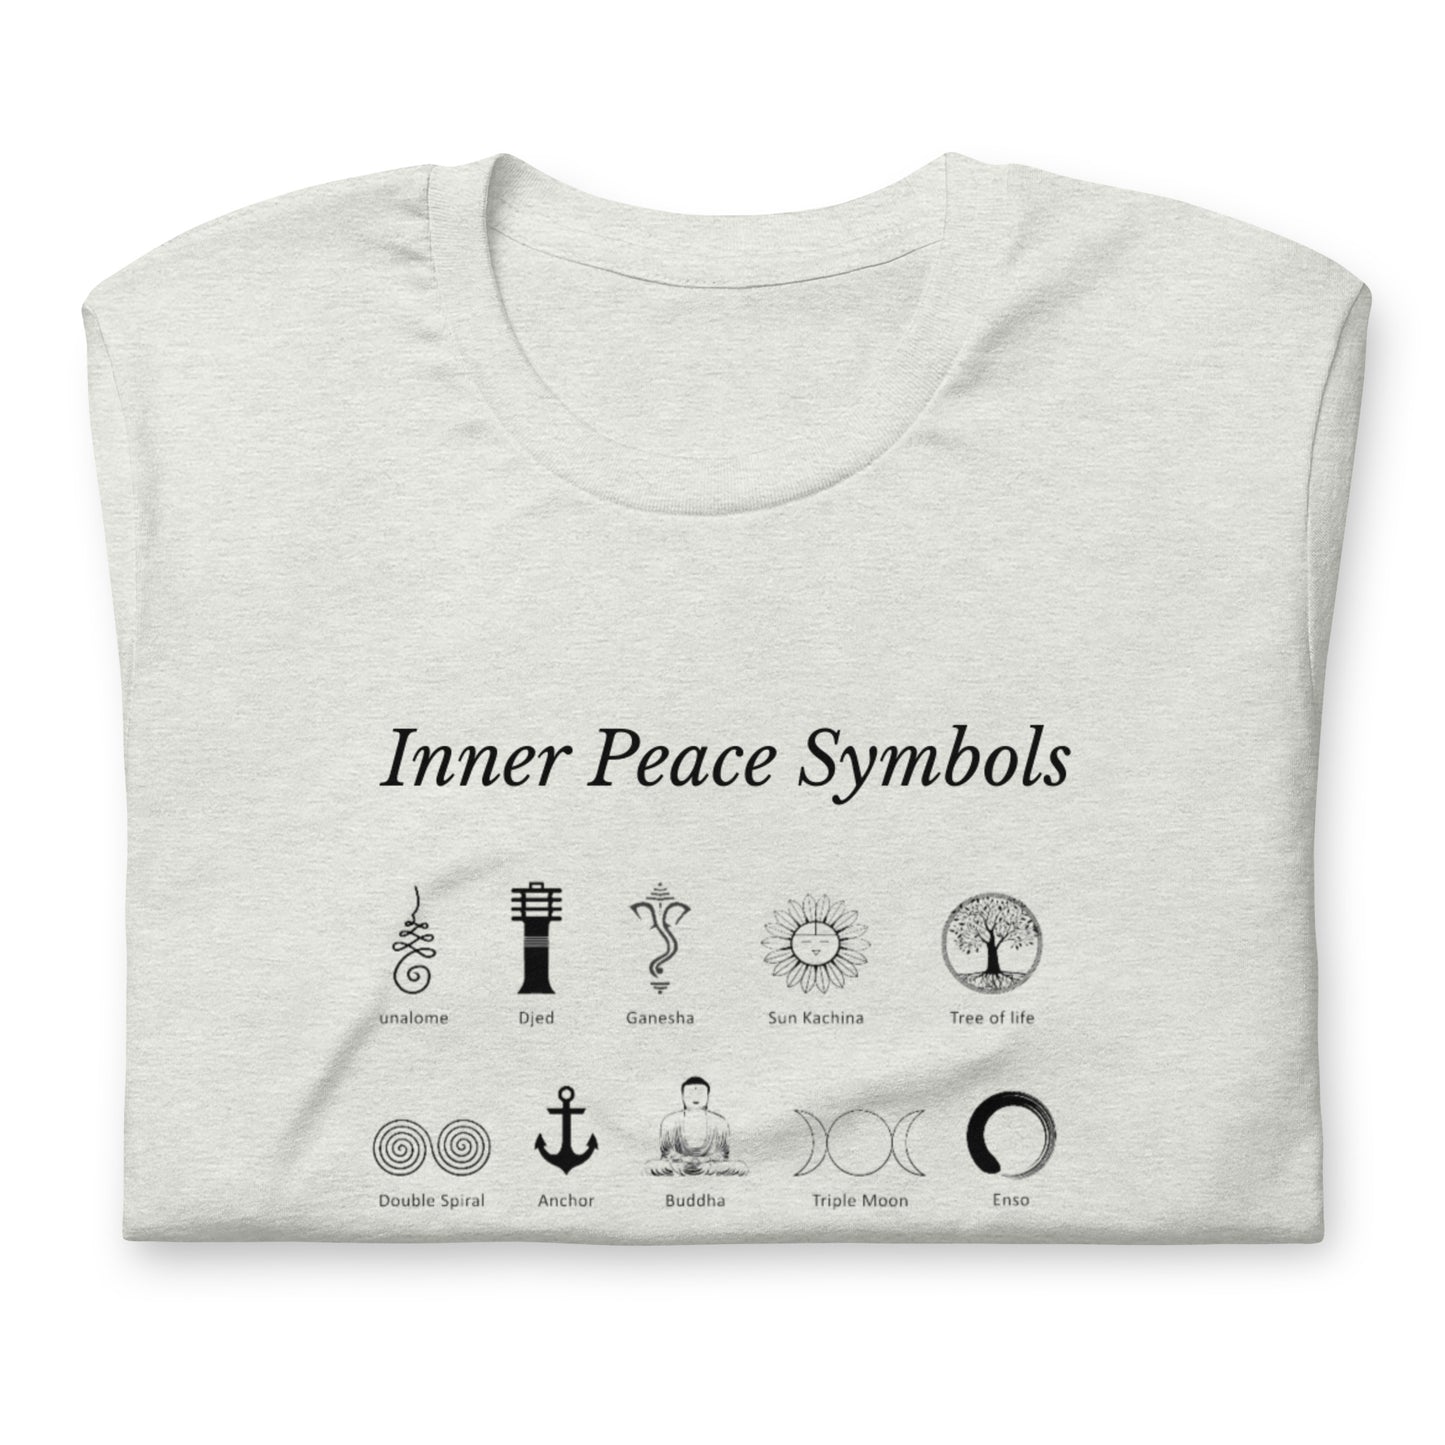 symbols of inner peace